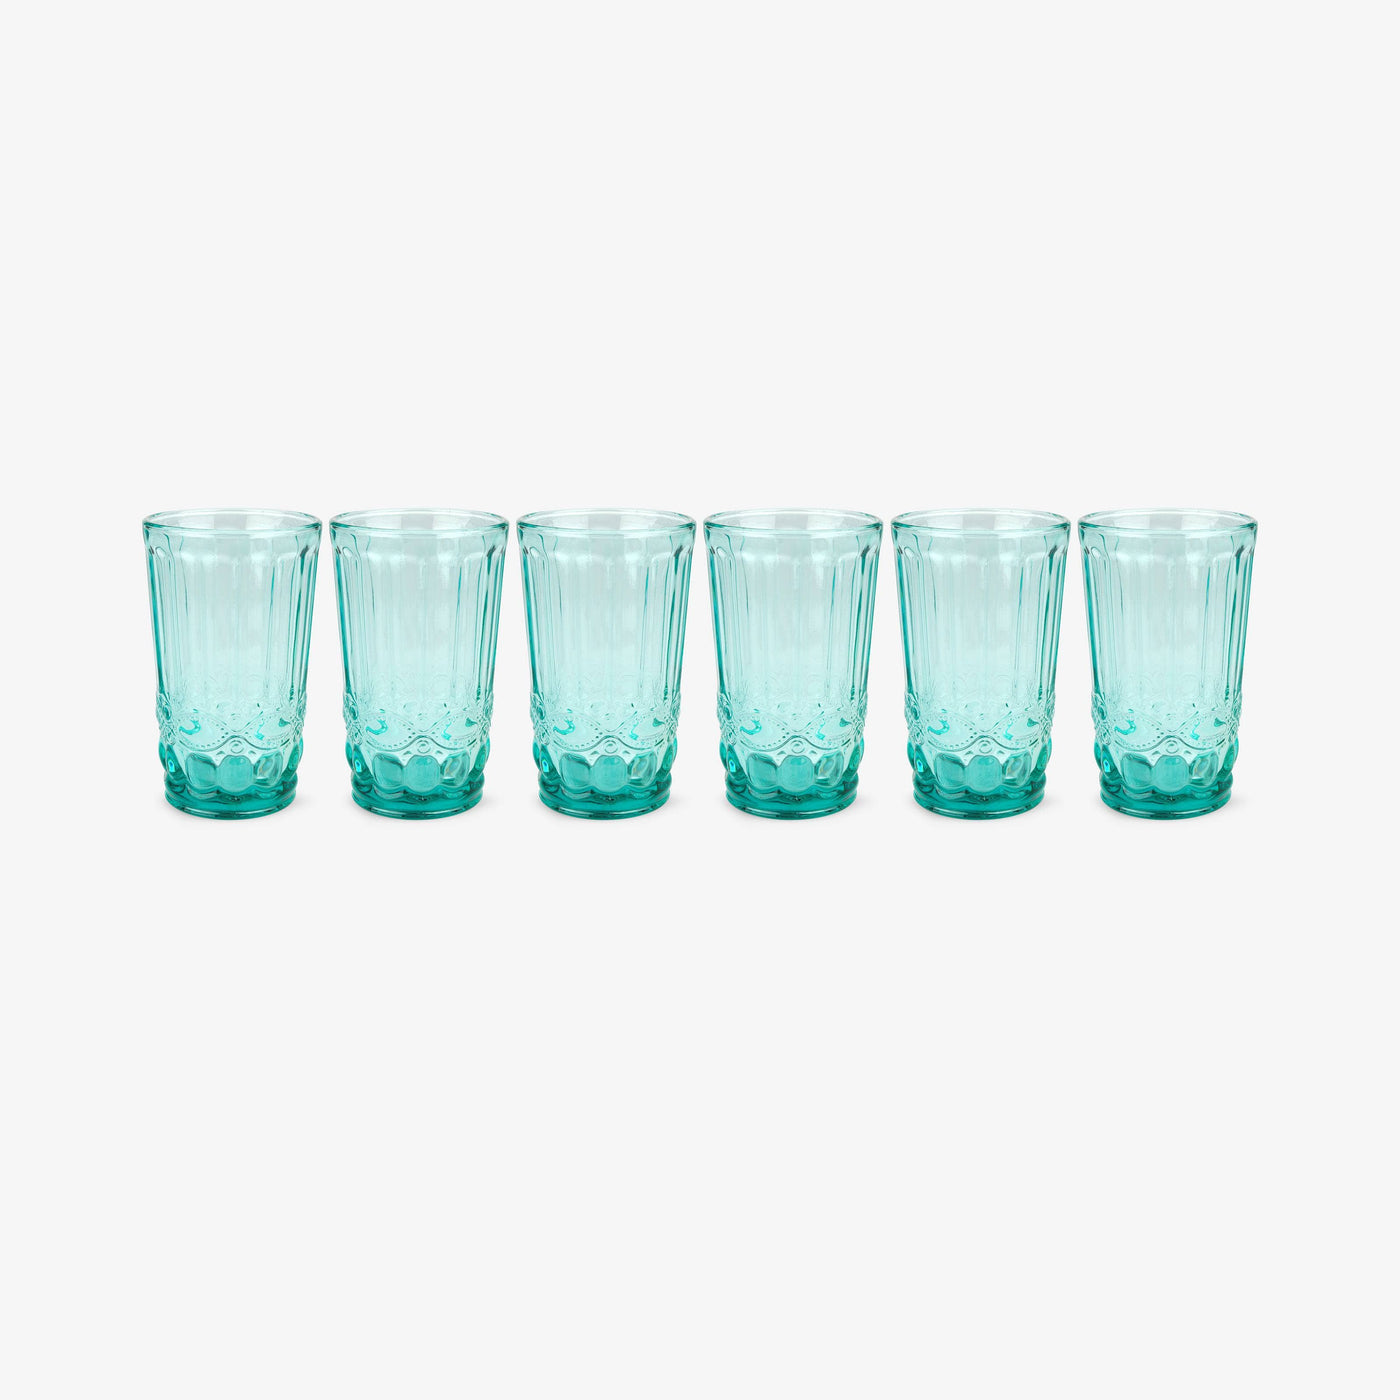 Aurora Set of 6 Tumblers, Turquoise, 8x8x13 cm 1